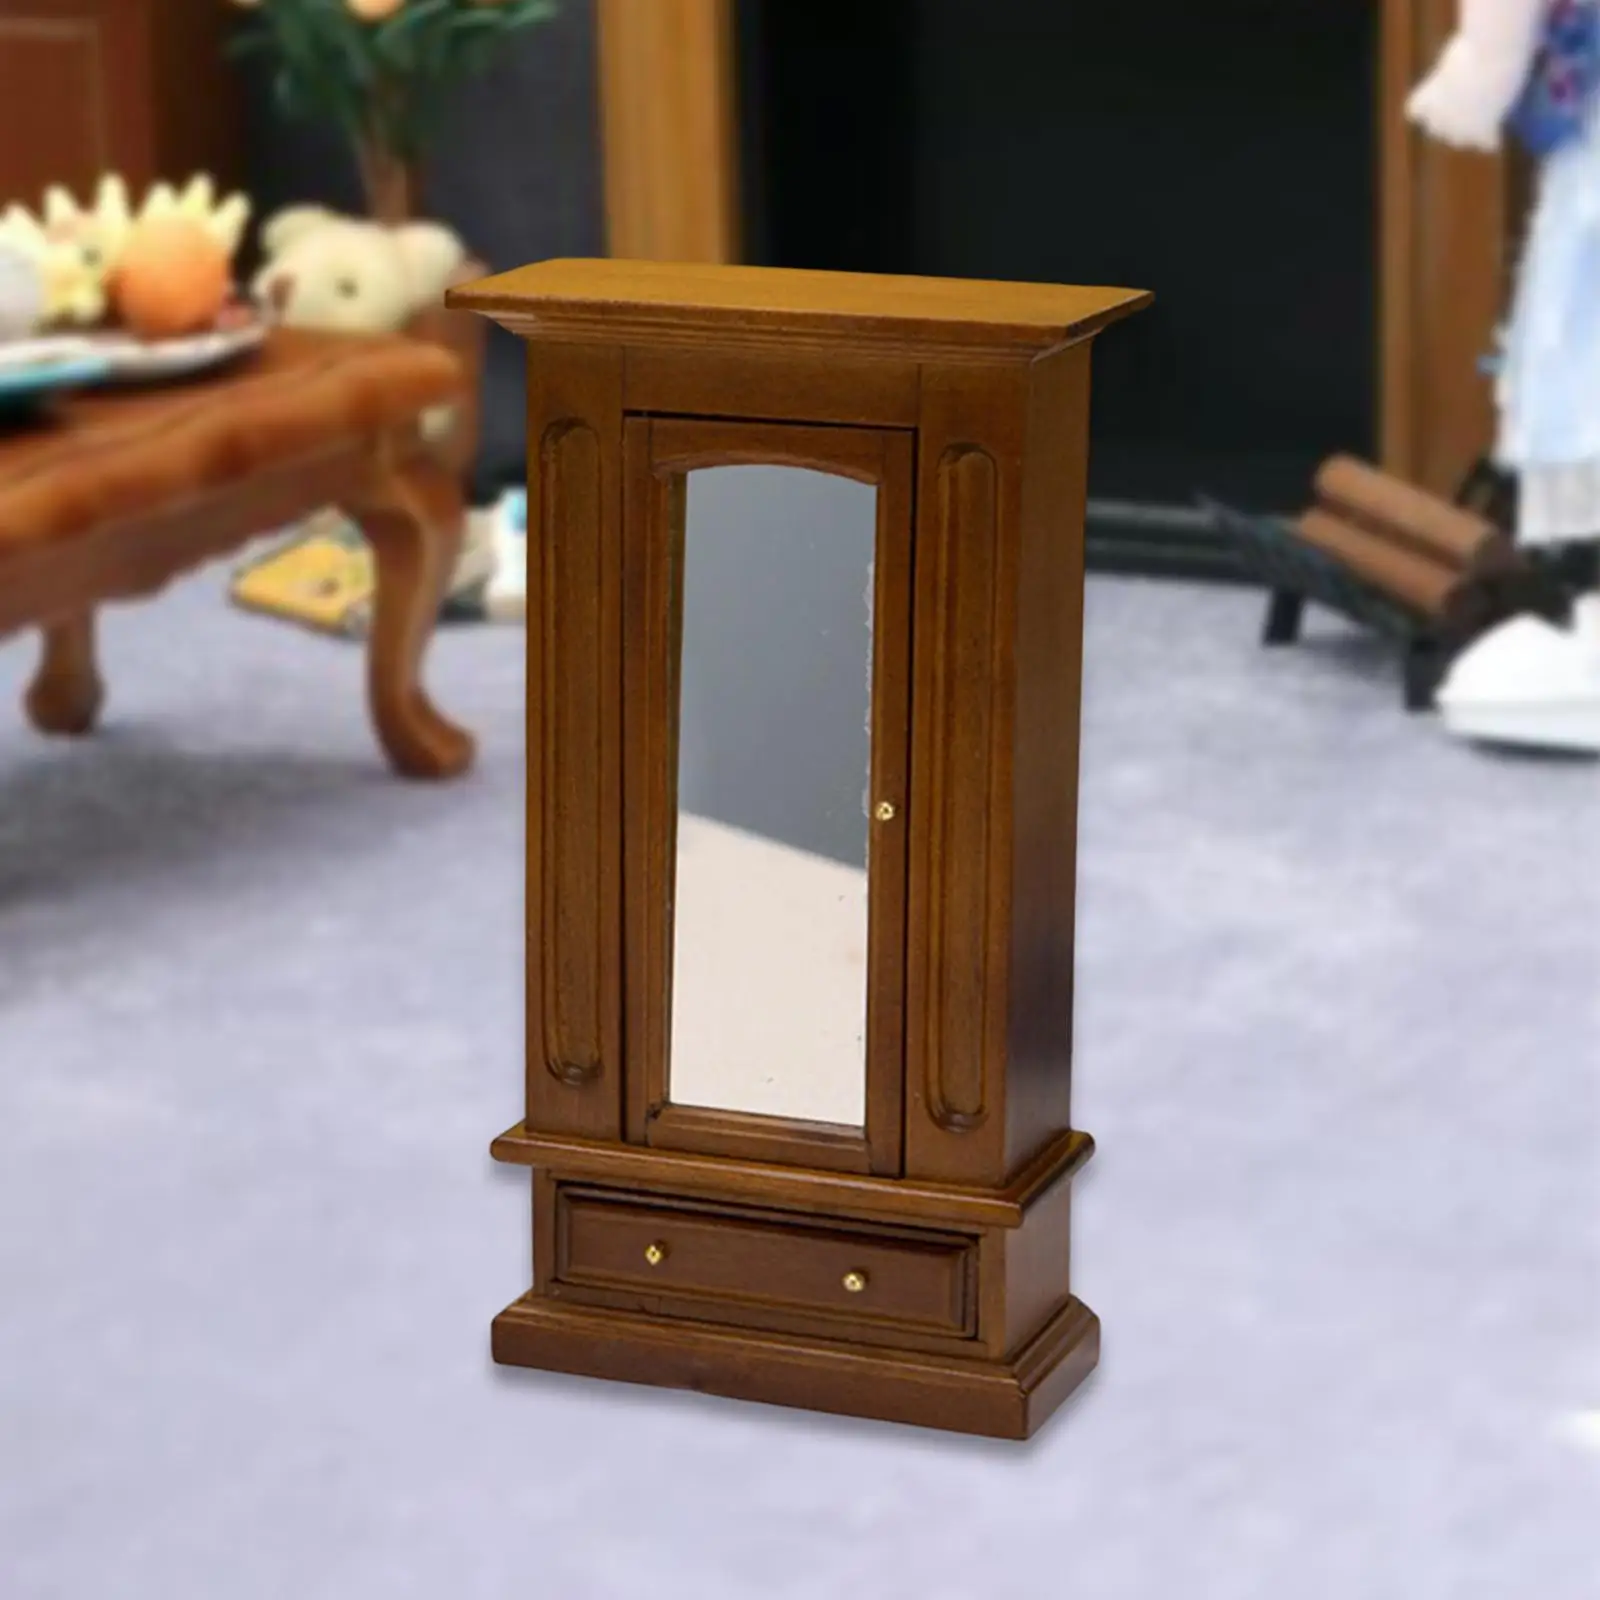 1/12 Dollhouse Wardrobe with Mirror Miniature Wood Furniture Study Decor